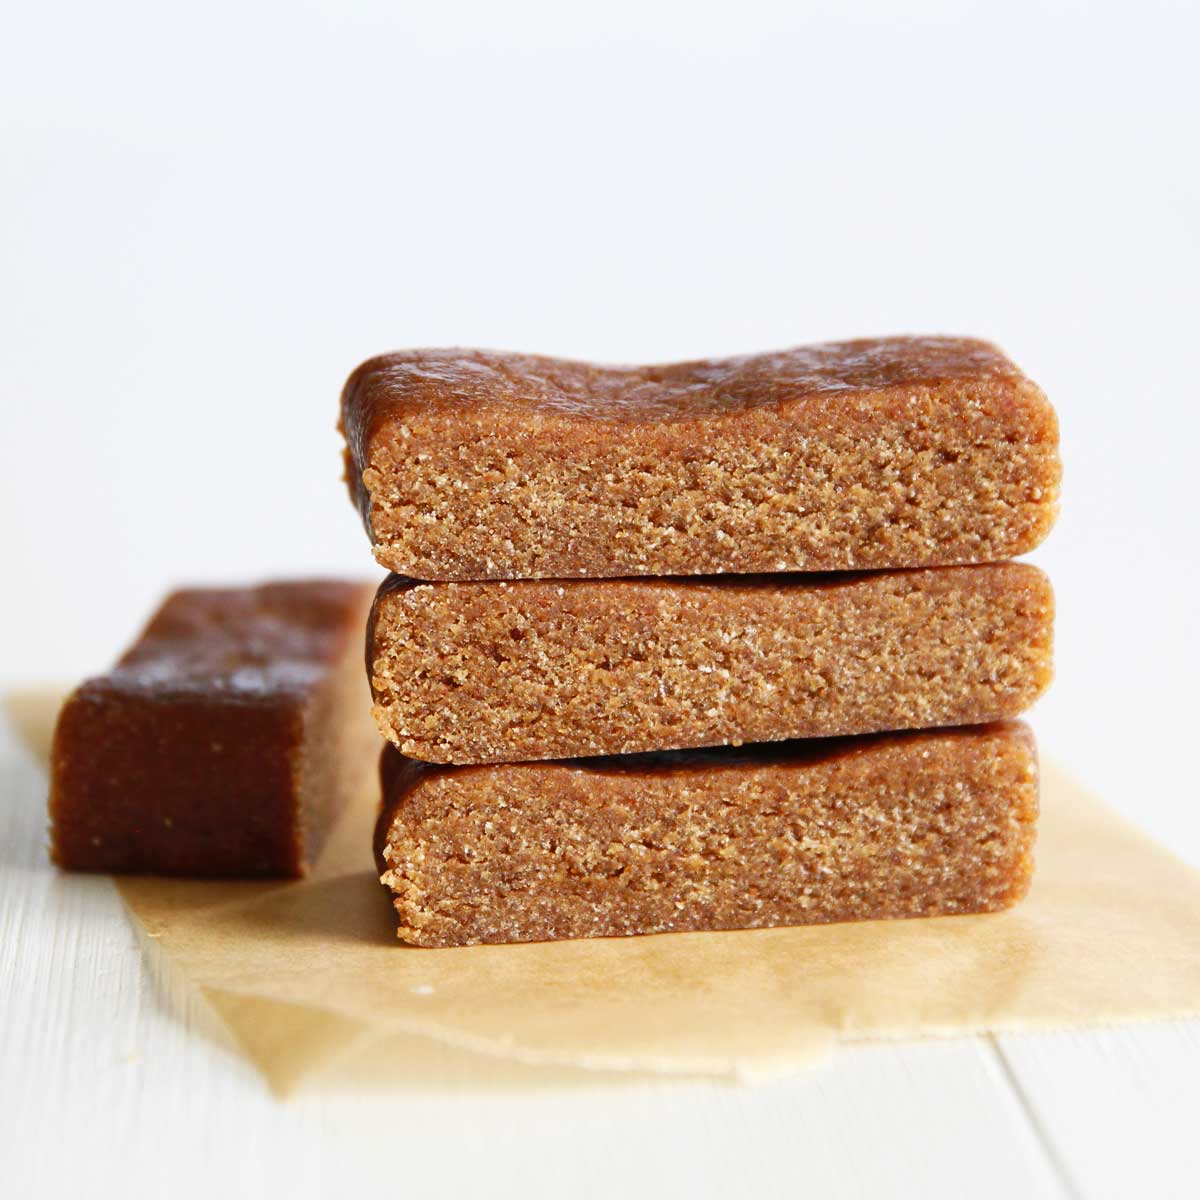 Gingerbread Collagen Protein Bars: a Healthier Festive Snack - Zero-Sugar Whipped Cream